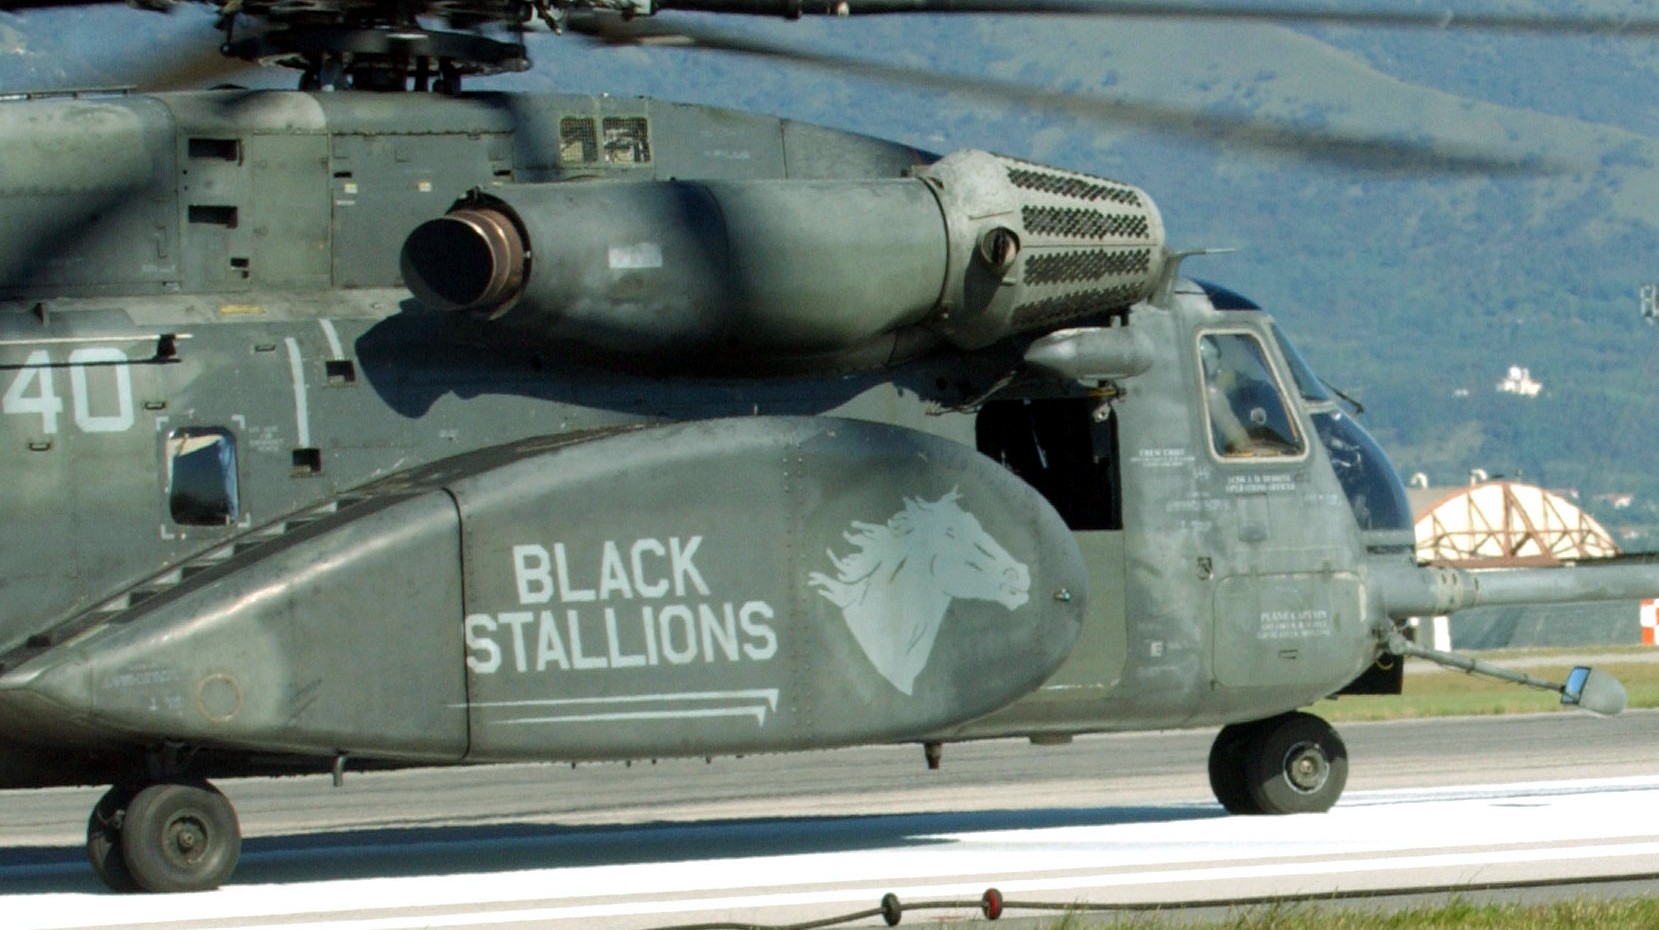 hc-4 black stallions helicopter combat support squadron mh-53e sea dragon 50